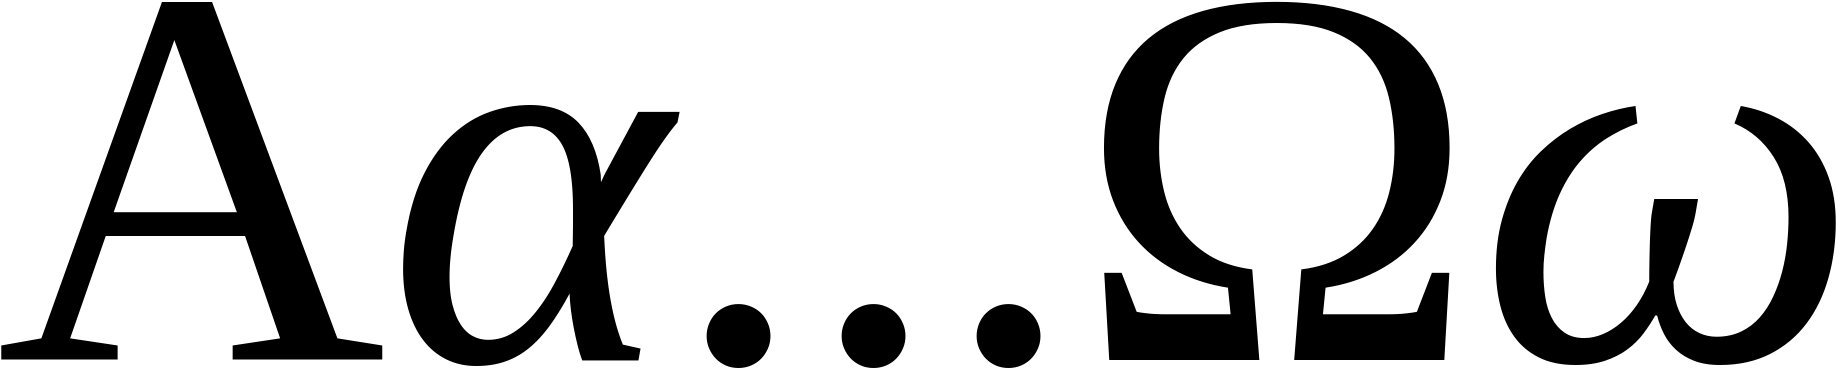 Open - Aesop Logo (2000x443)